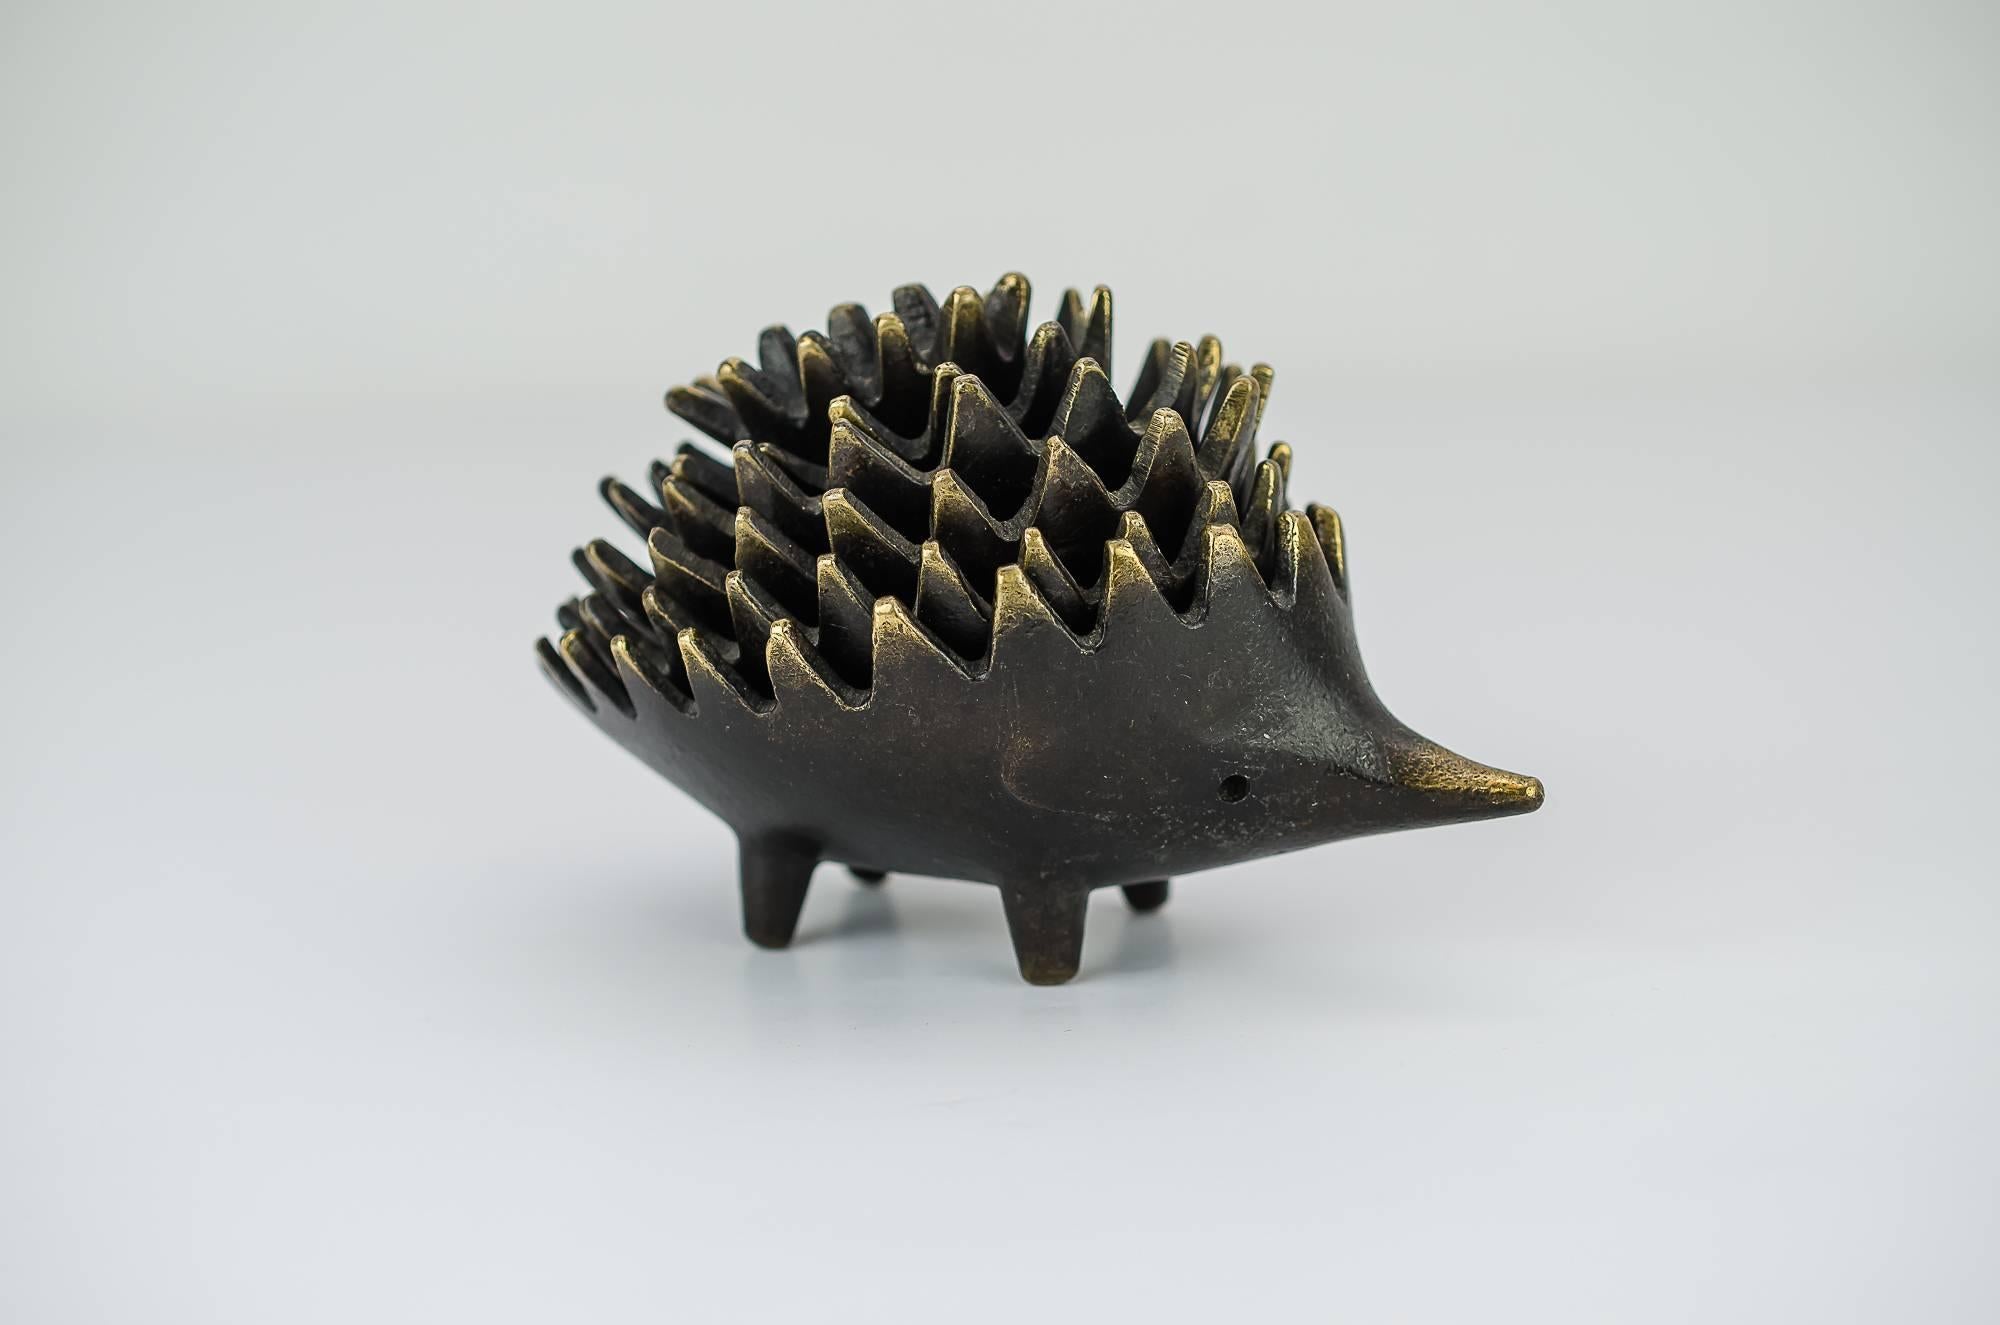 Hedgehog by Walter Bosse for Hertha Baller
Original condition.